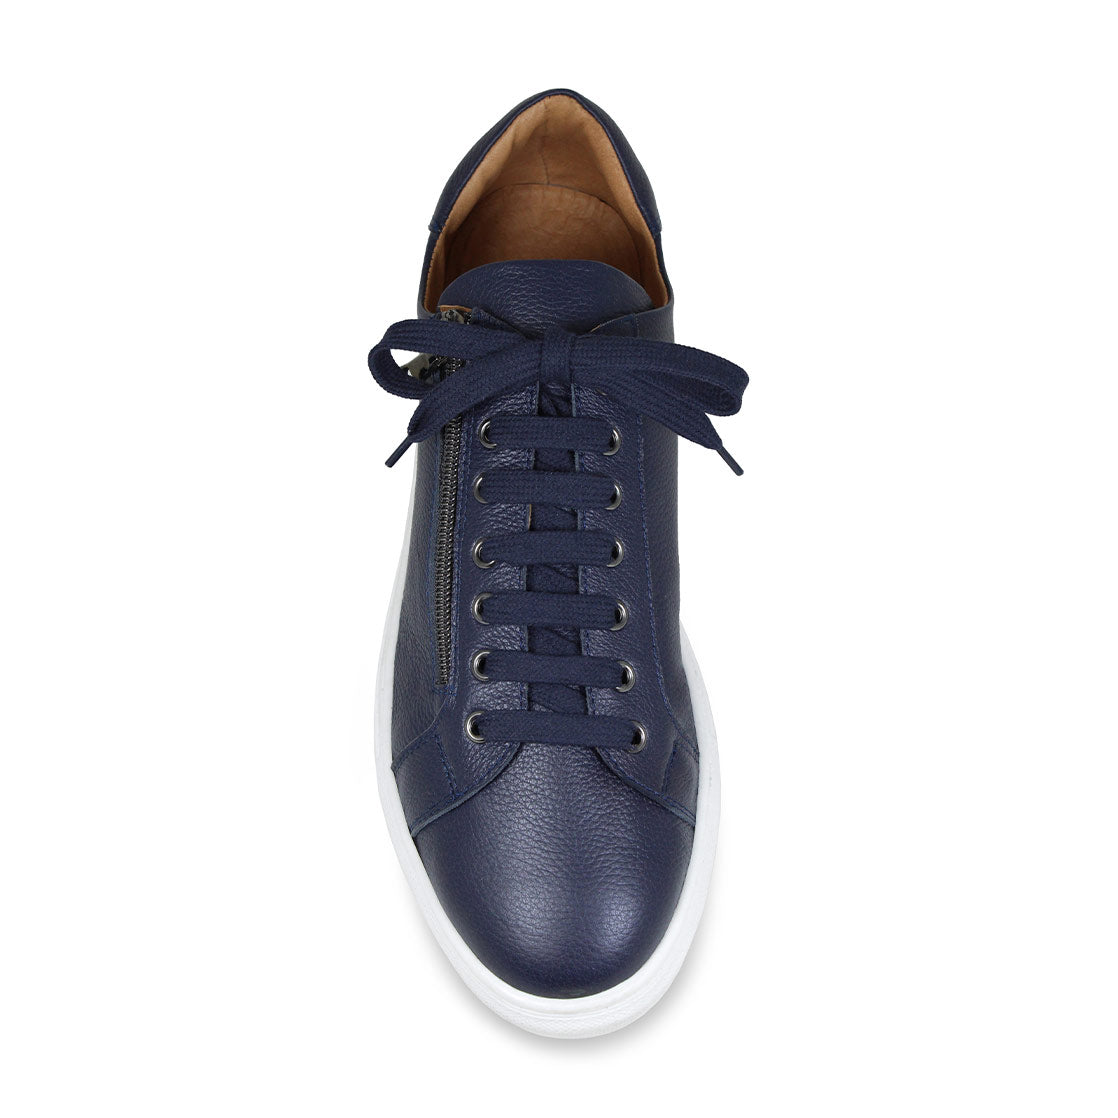 Lacoste Rayford 7 SRM Navy Blue Leather Sneakers Mens Size 11.5  7-28SRM4108120 | eBay